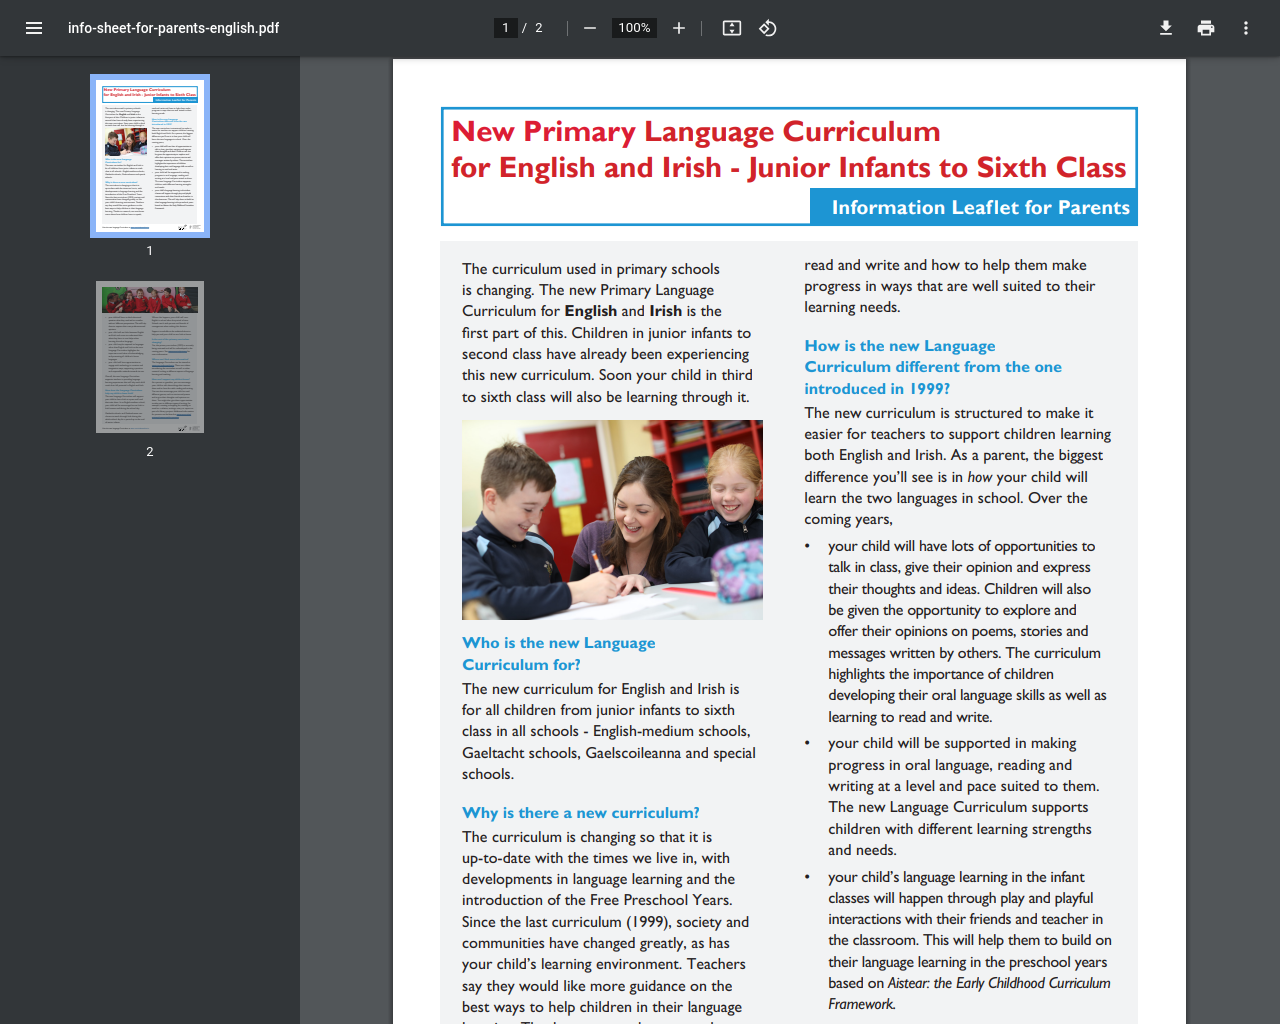 New Language Language Curriculum for English and Irish-Junior Infants to Sixth Class